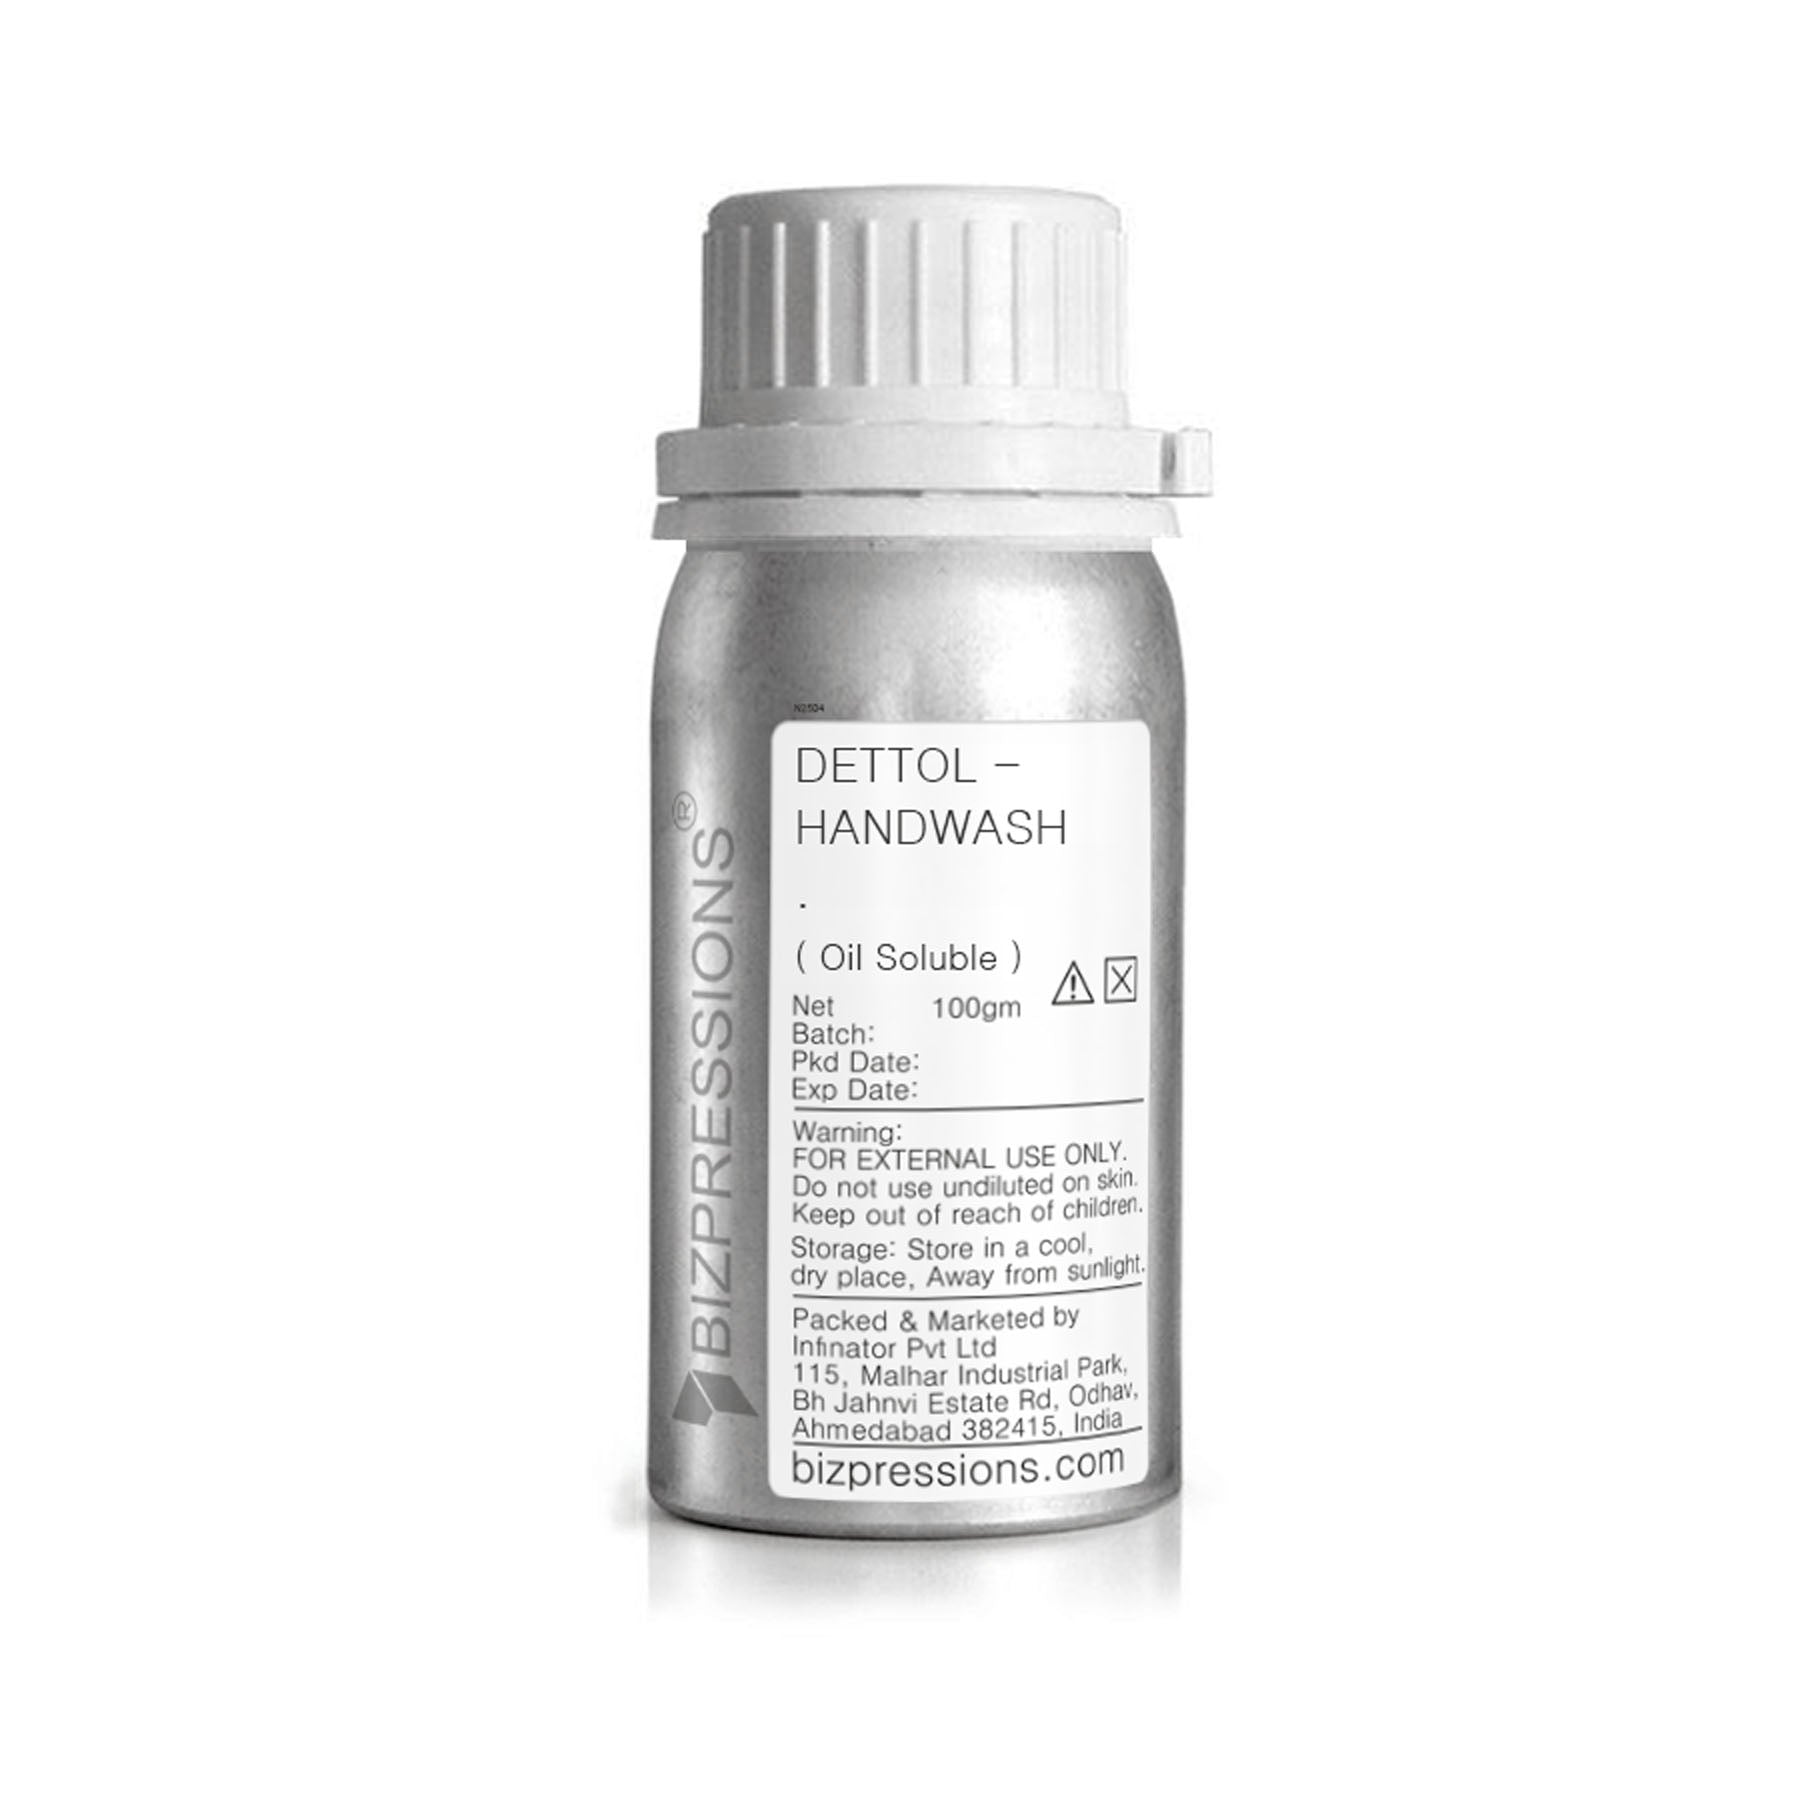 DETTOL - HANDWASH - Fragrance ( Oil Soluble ) - 100 gm